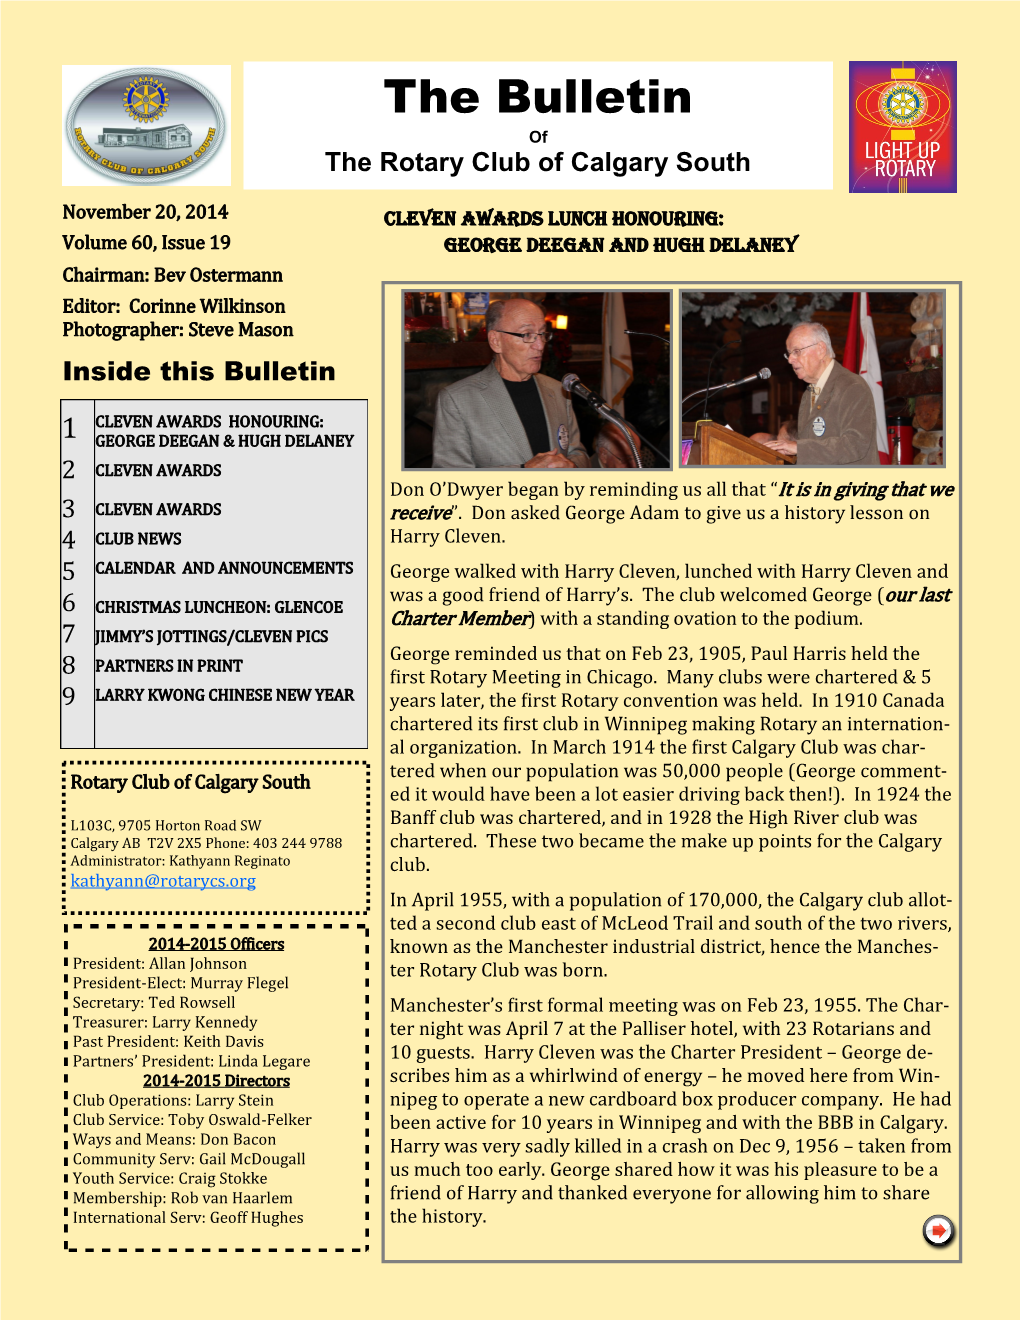 The Rotary Club of Calgary South